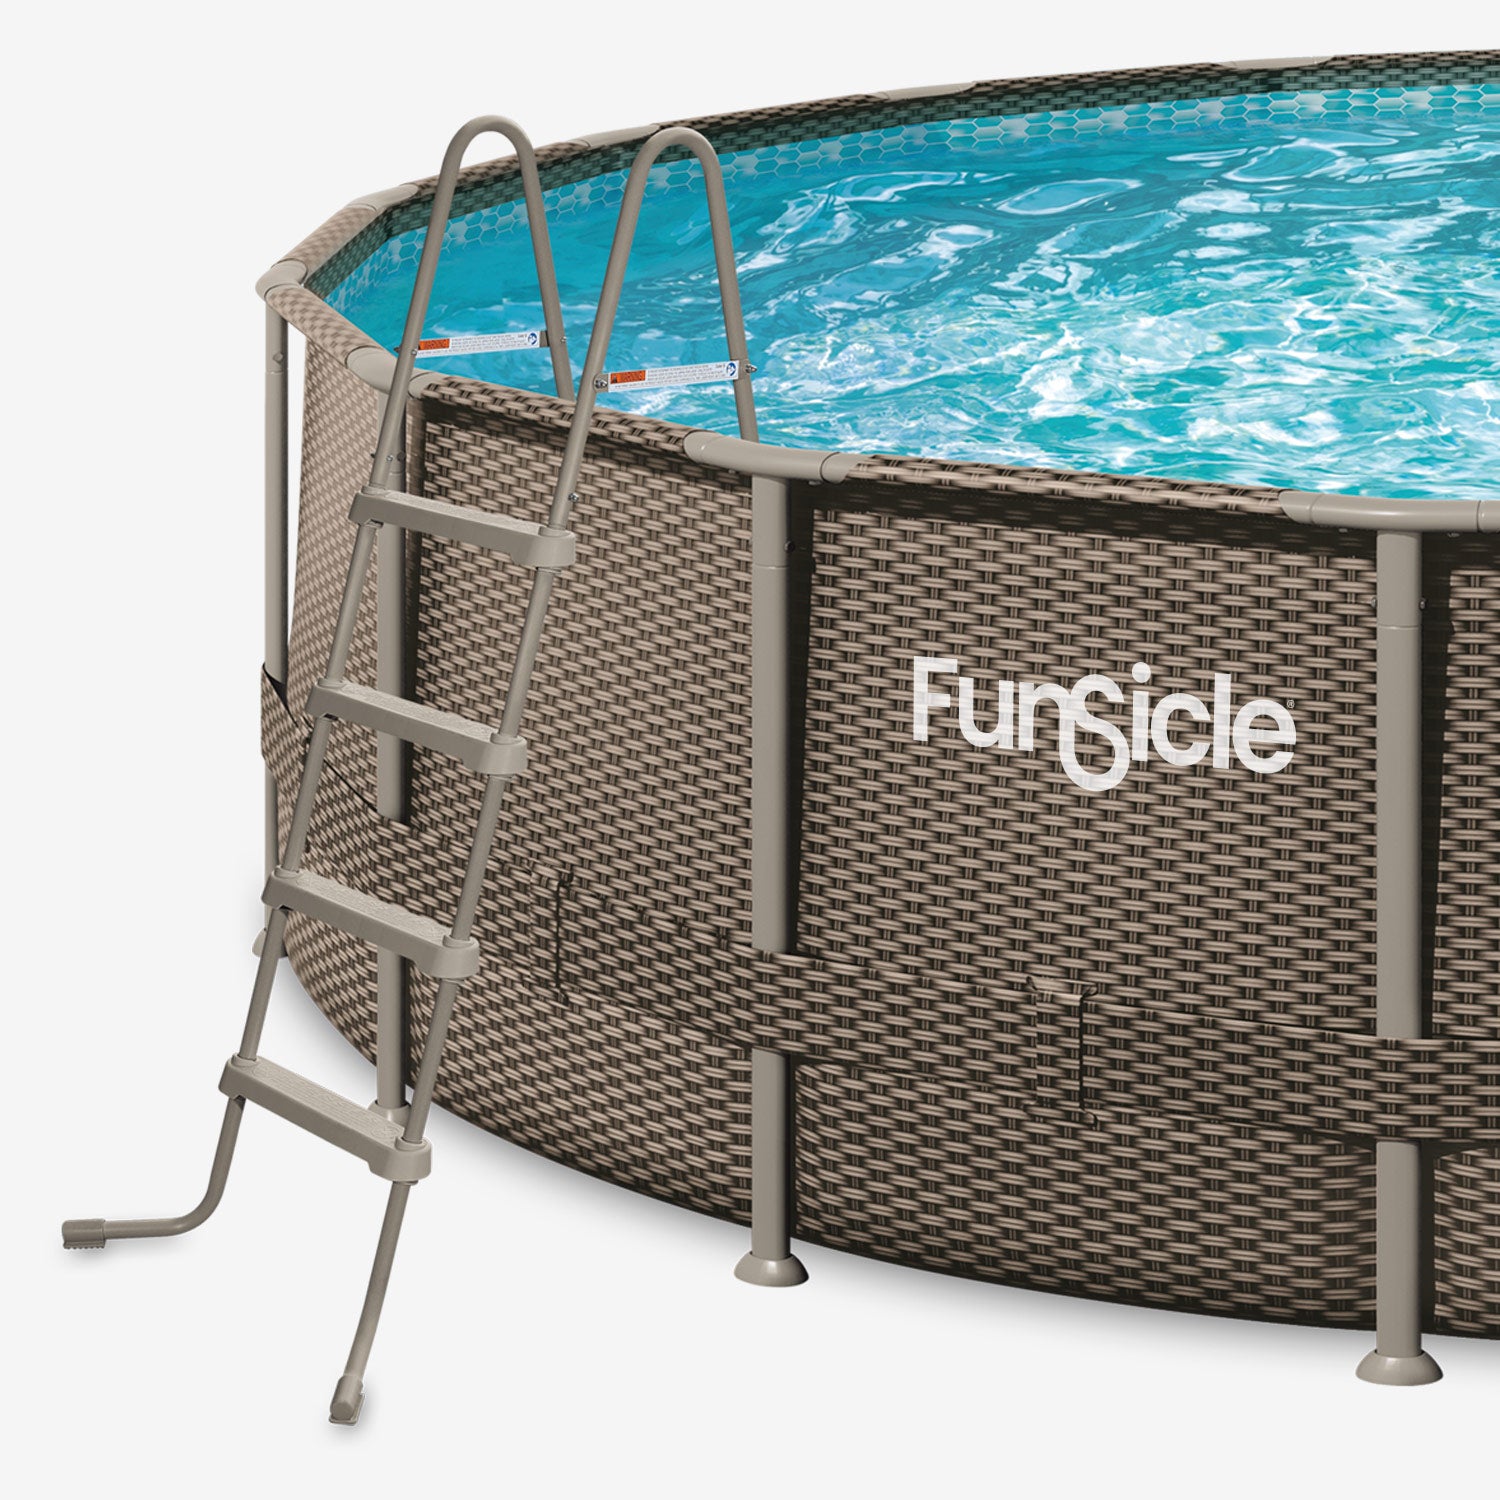 Funsicle 52" SureStep Ladder next to Funsicle Oasis Designer Pool